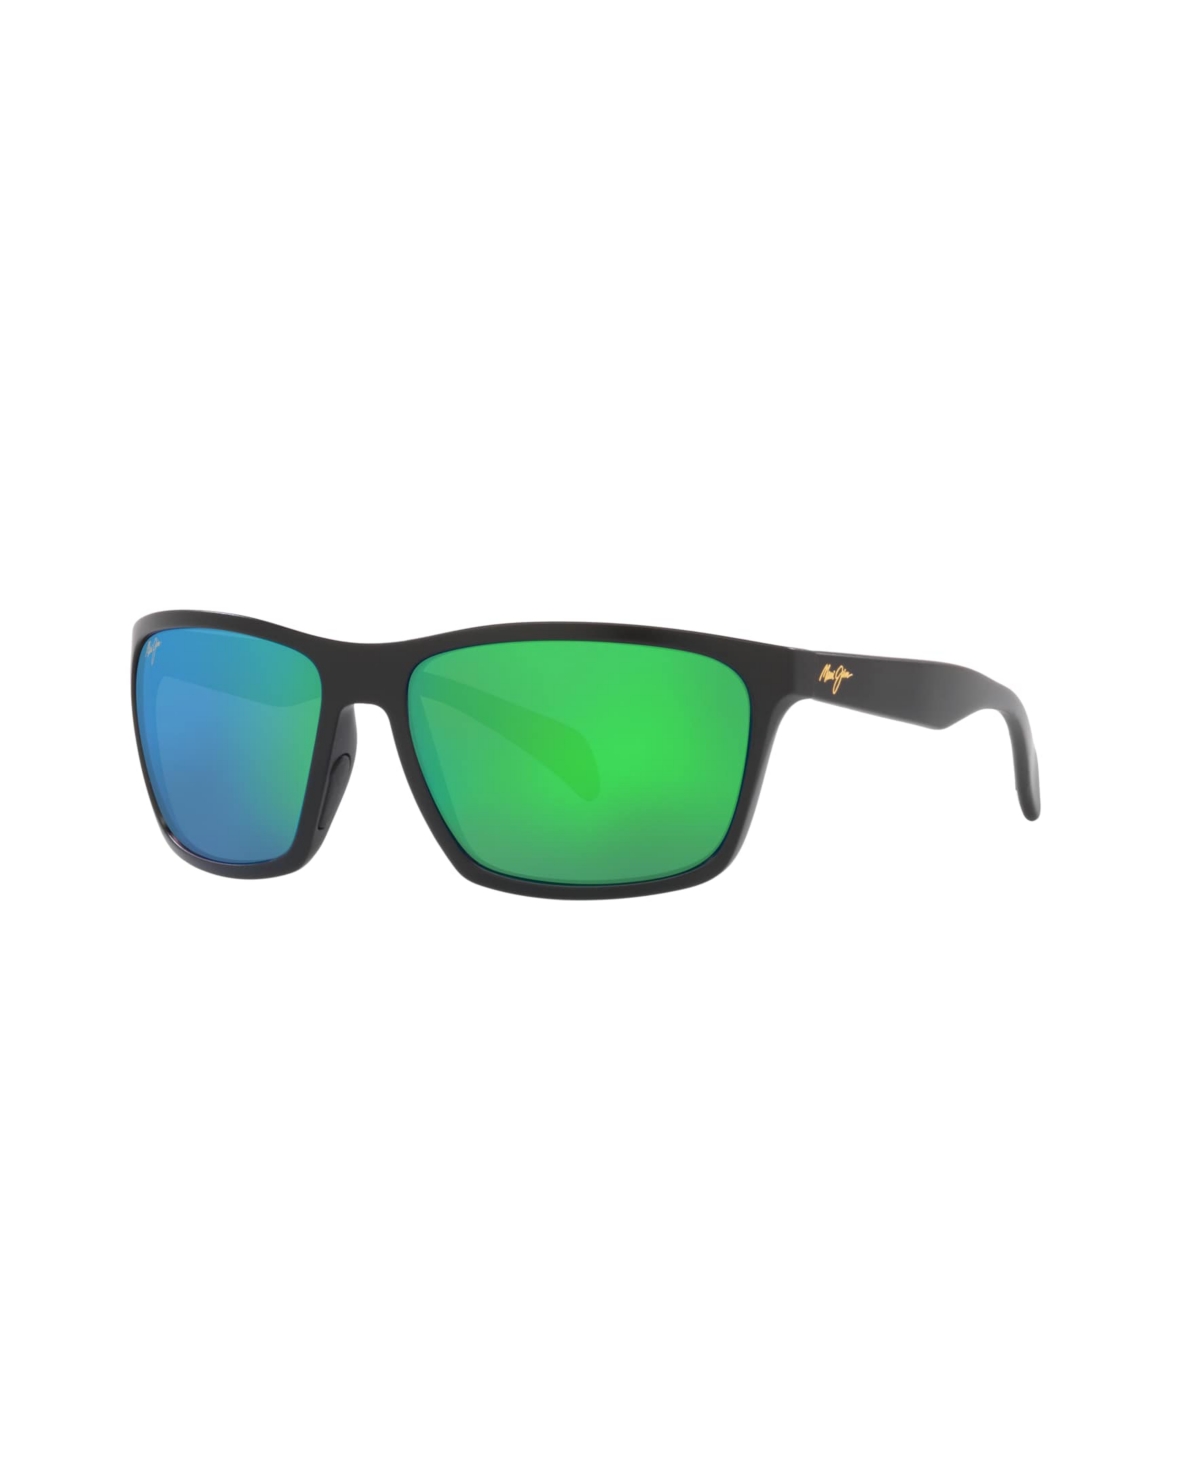 Men's Polarized Sunglasses - Black Matte